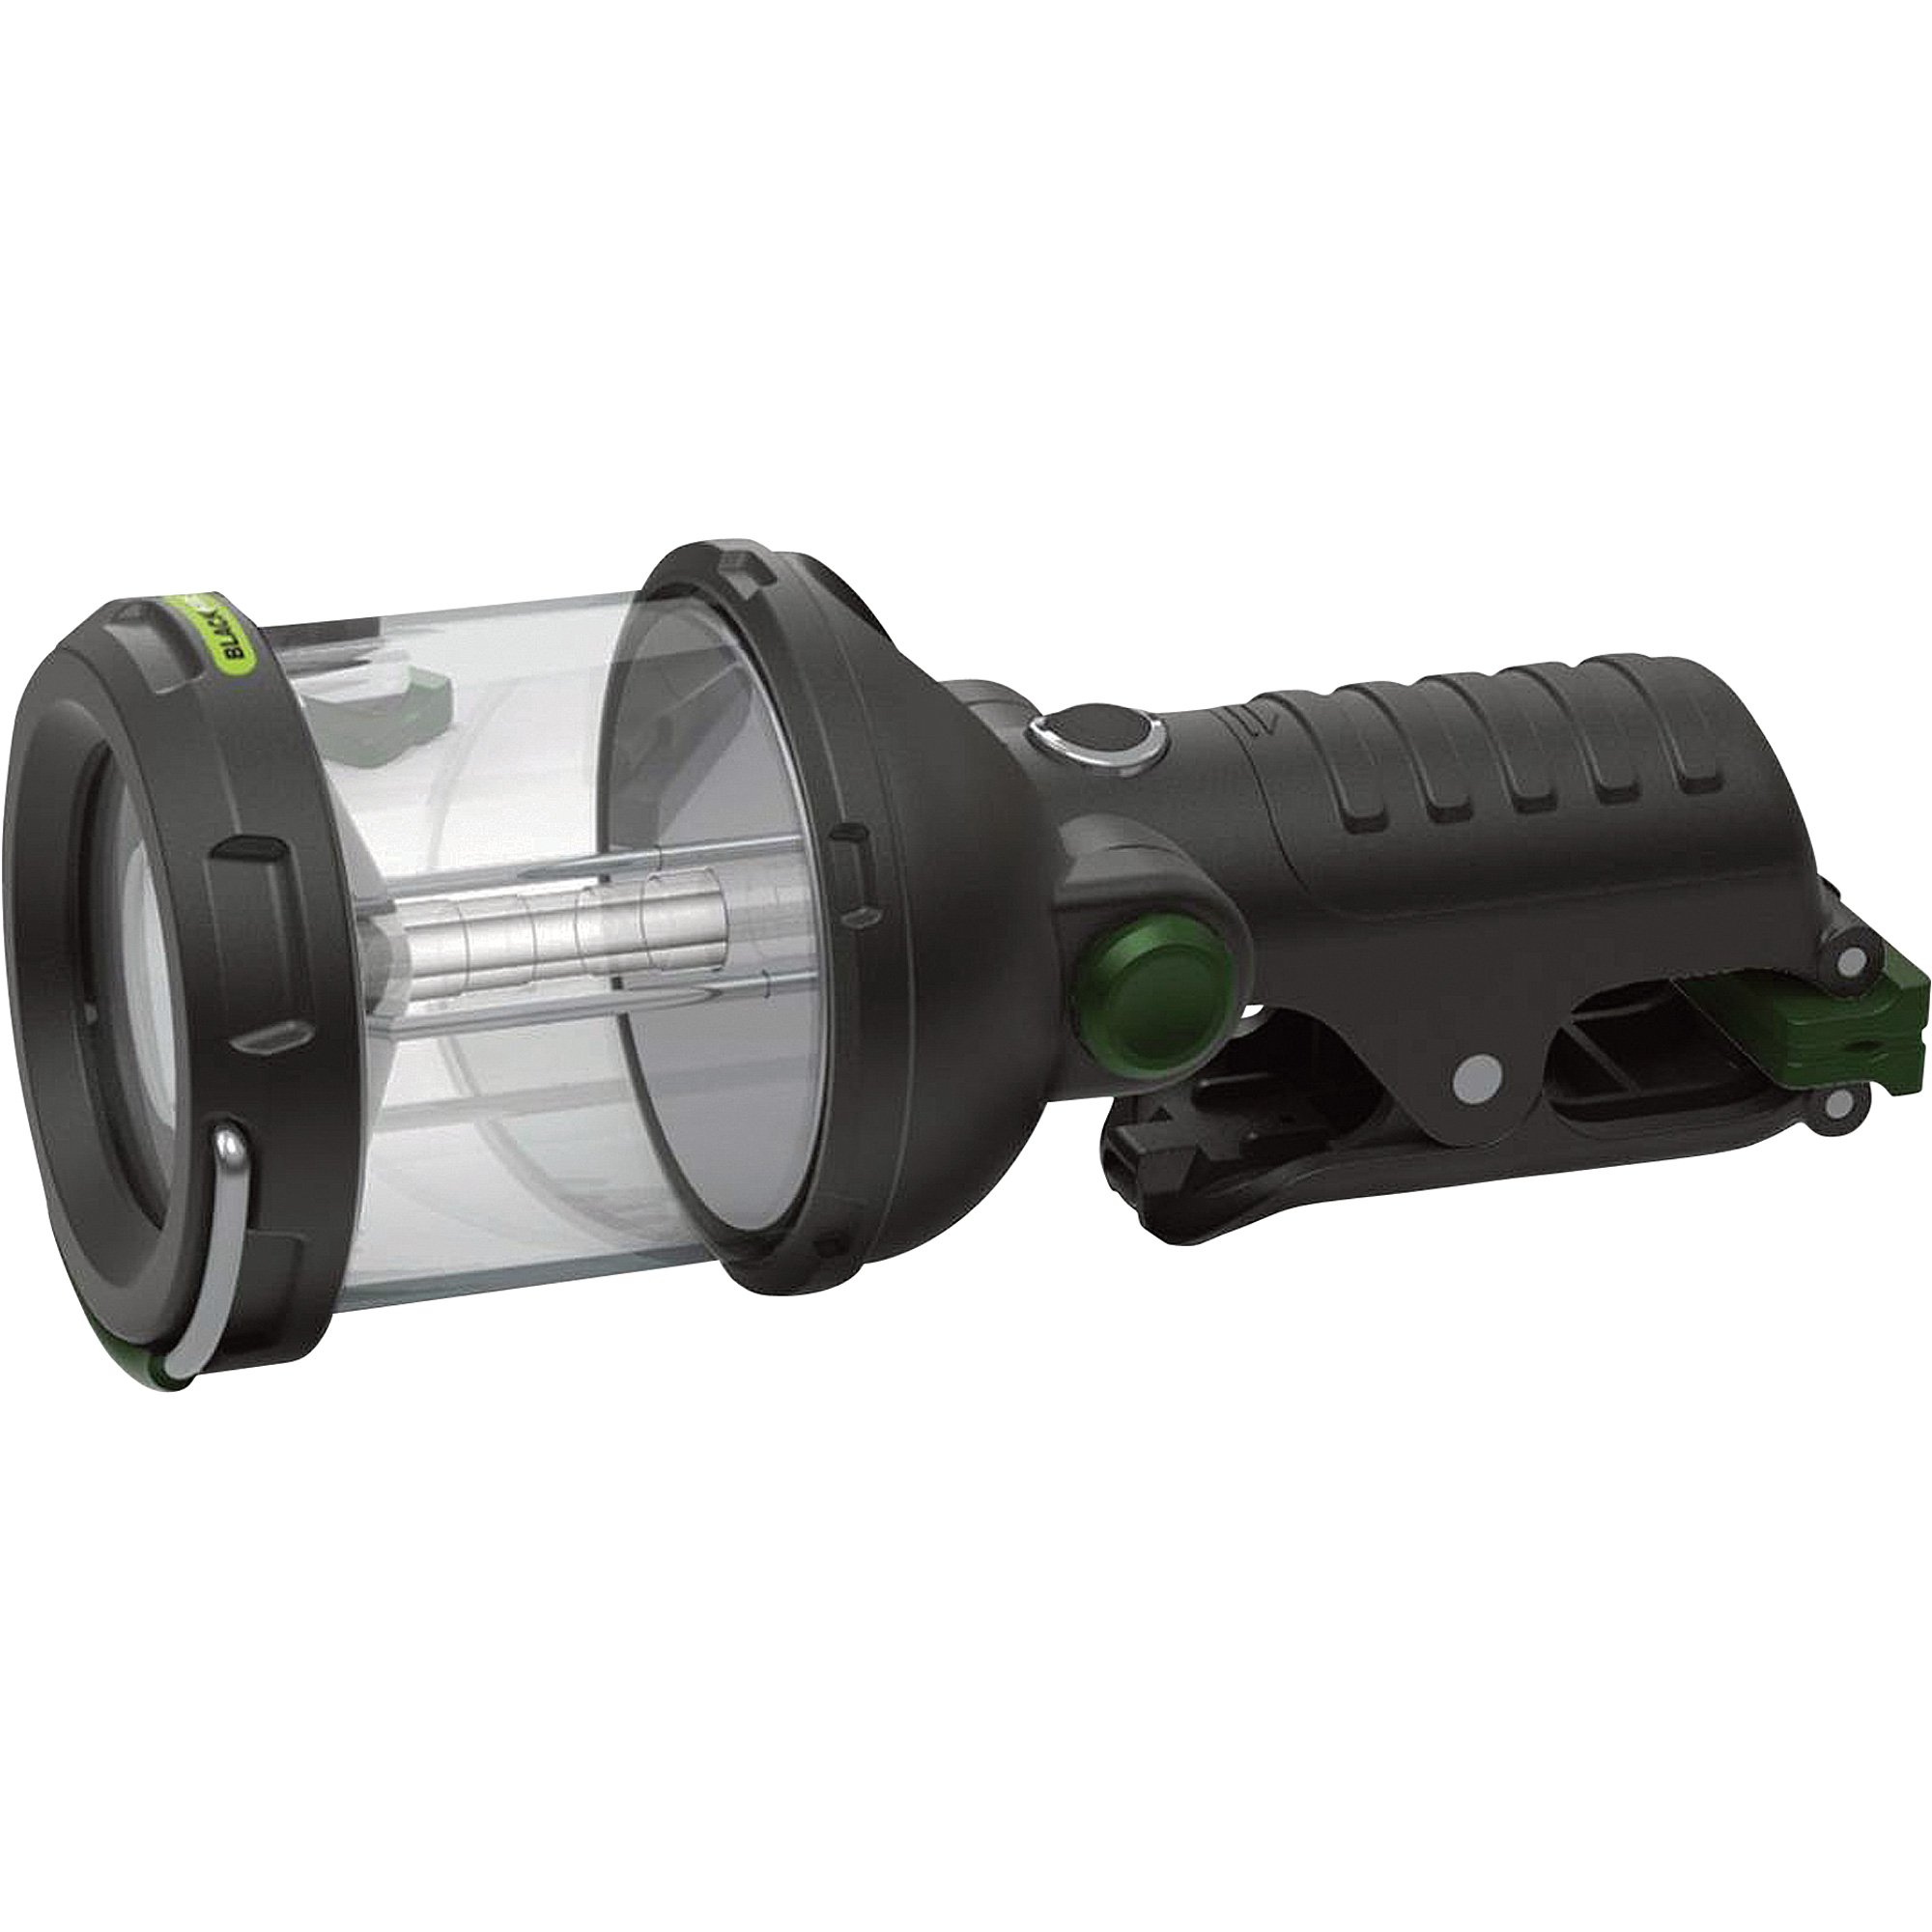 Blackfire Rechargeable Weatherproof Flashlight with Lantern